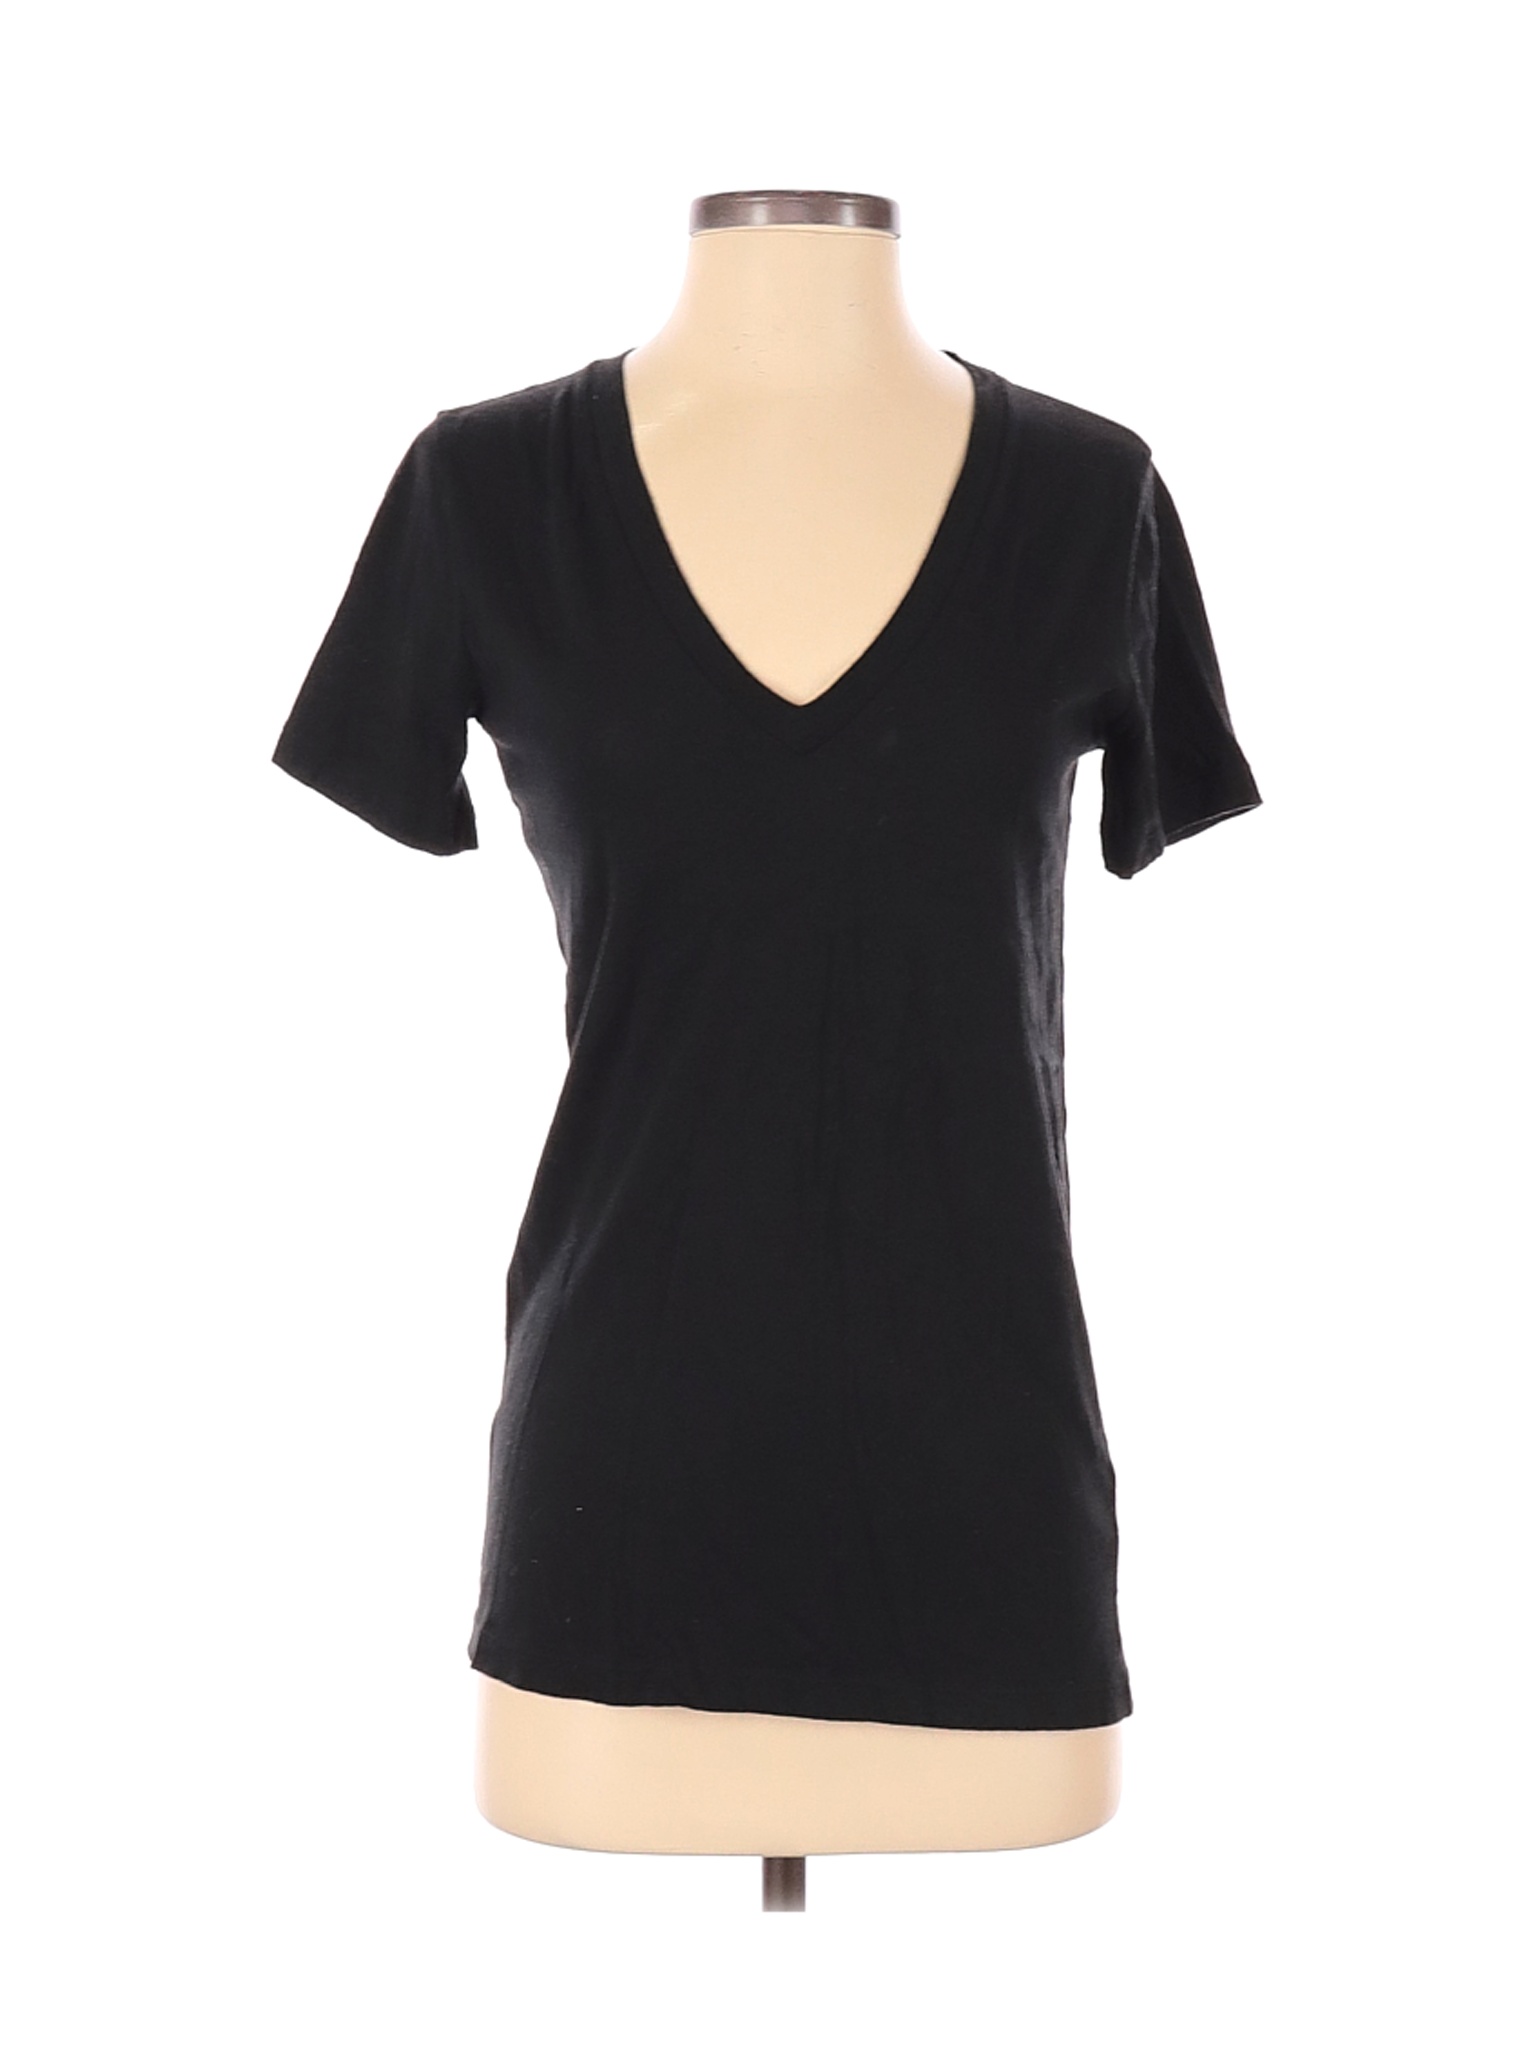 J.Crew Women Black Short Sleeve T-Shirt XS | eBay